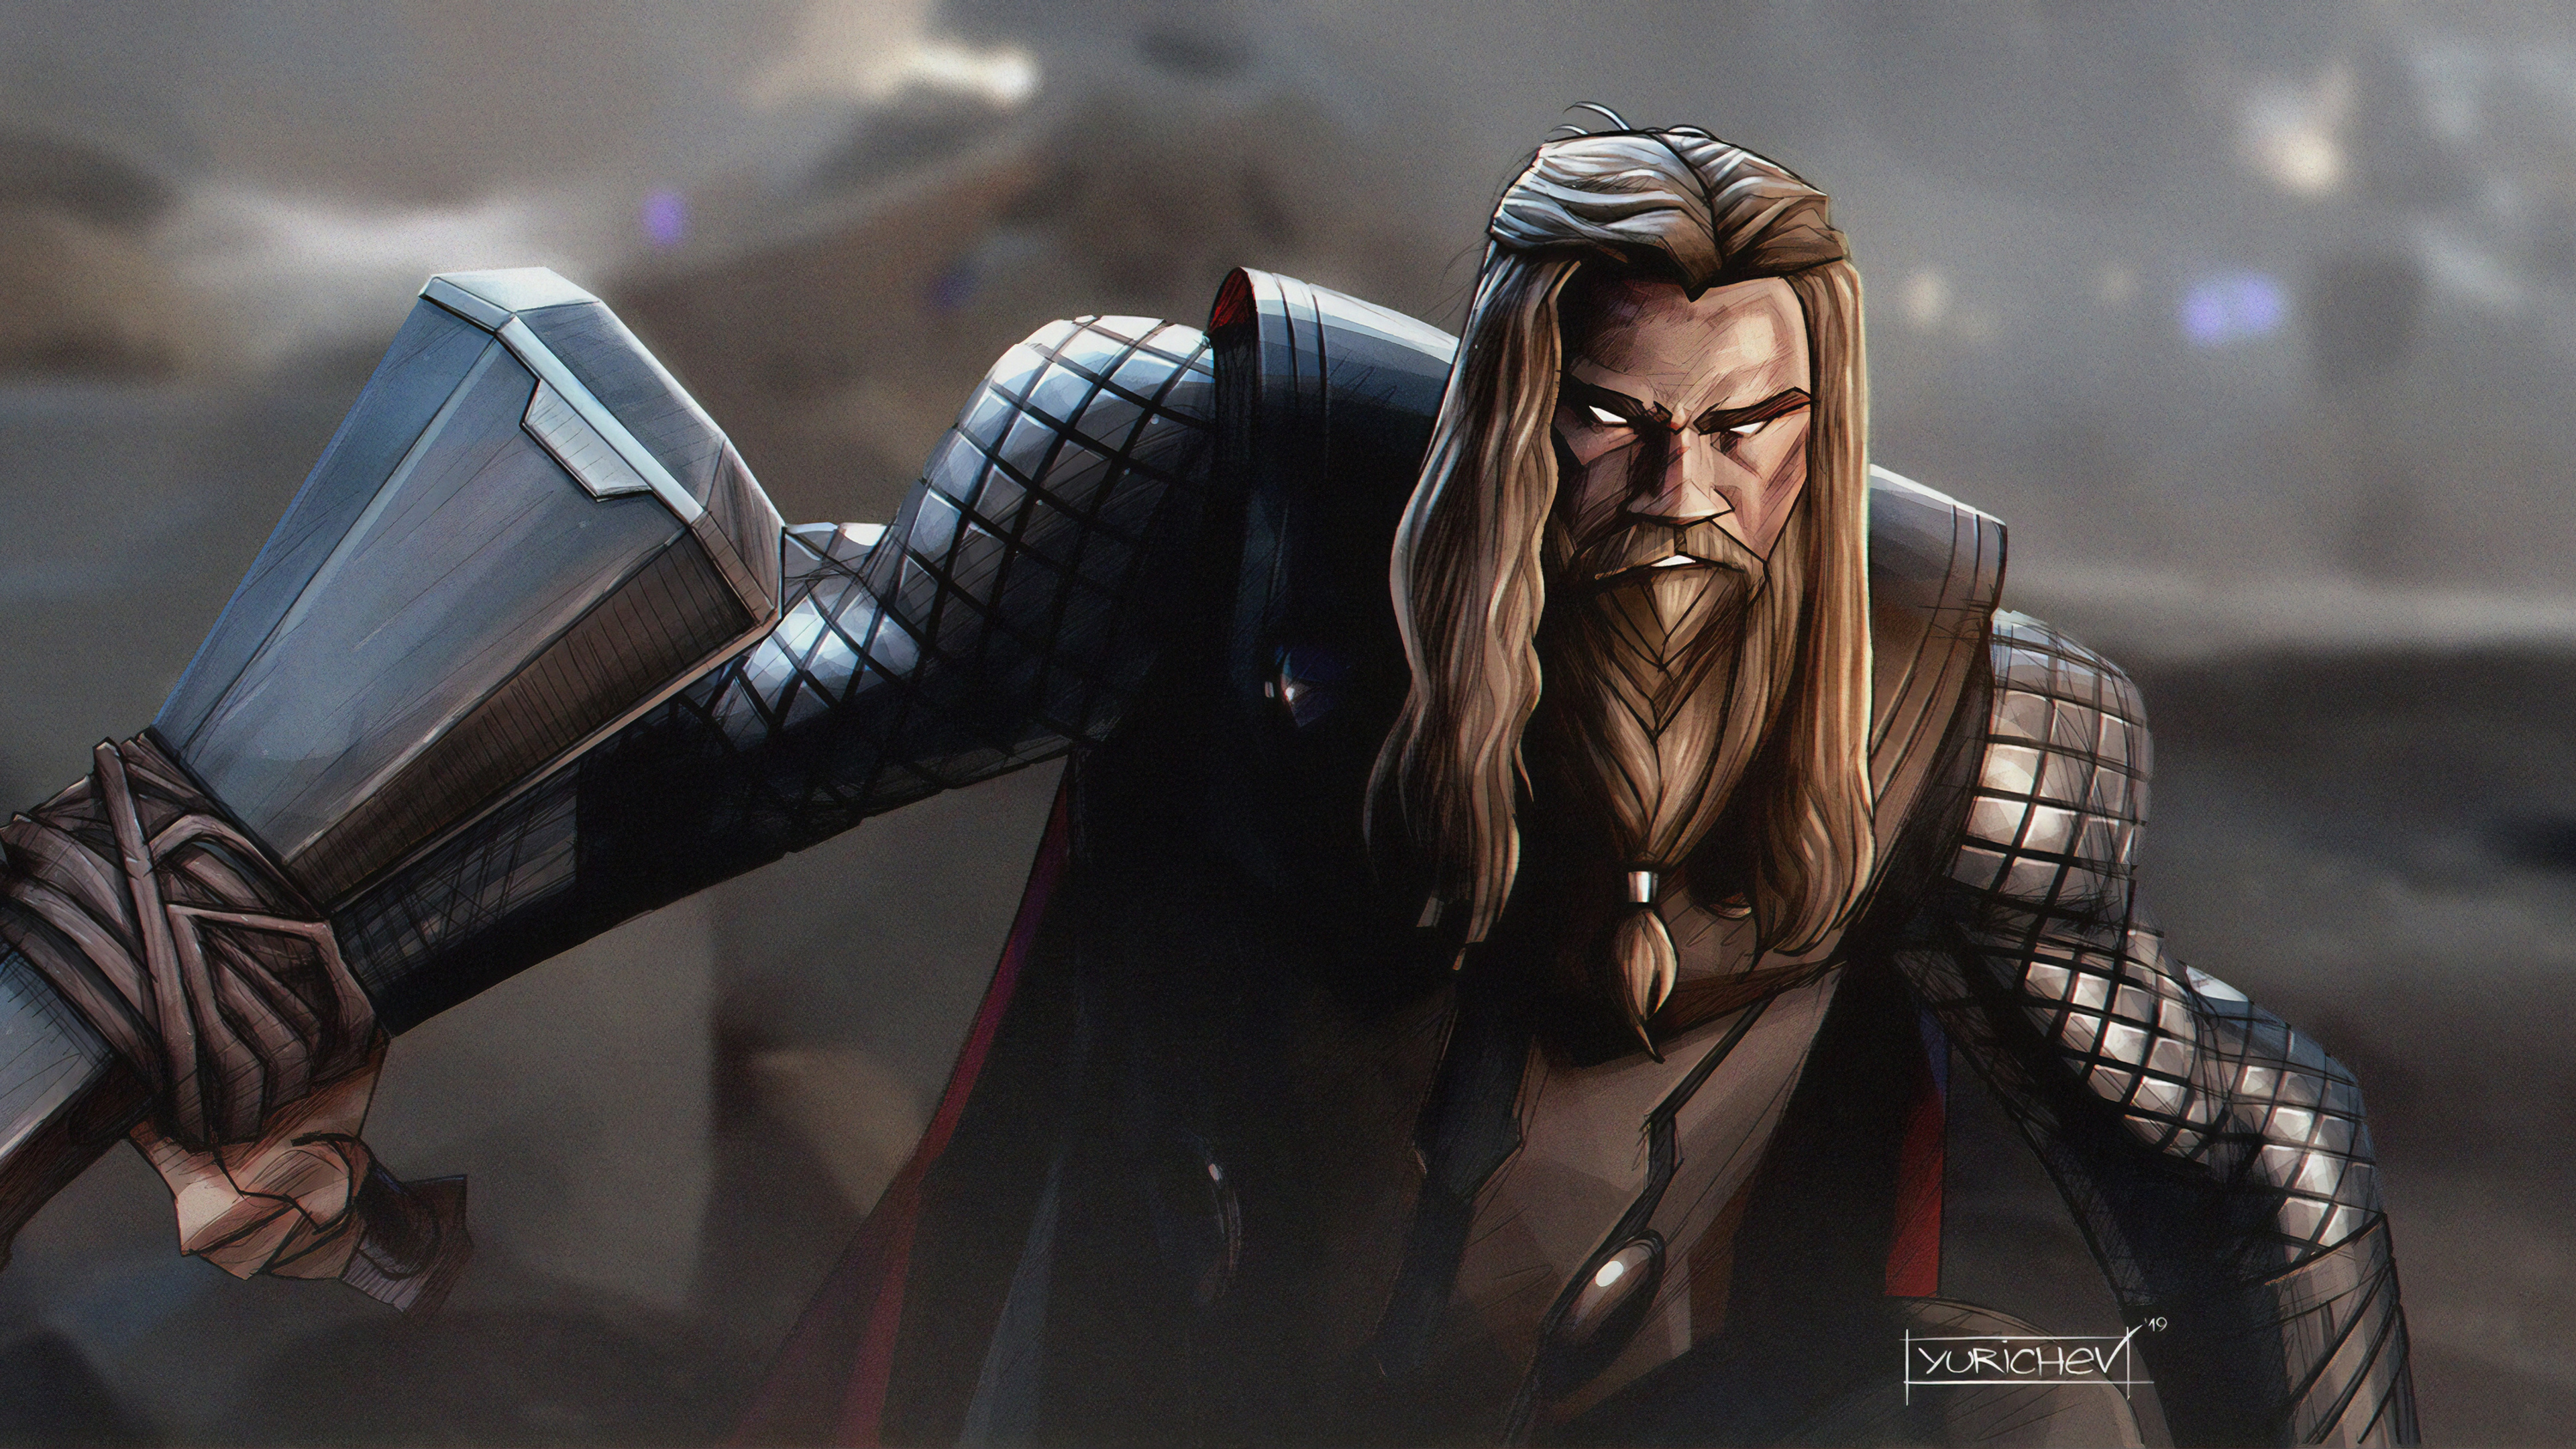 New Thor Avengers Endgame thor wallpapers, superheroes wallpapers, hd- wallpapers, digital art wallpapers, avengers endgame wallpap… | Thor  wallpaper, Thor, New thor